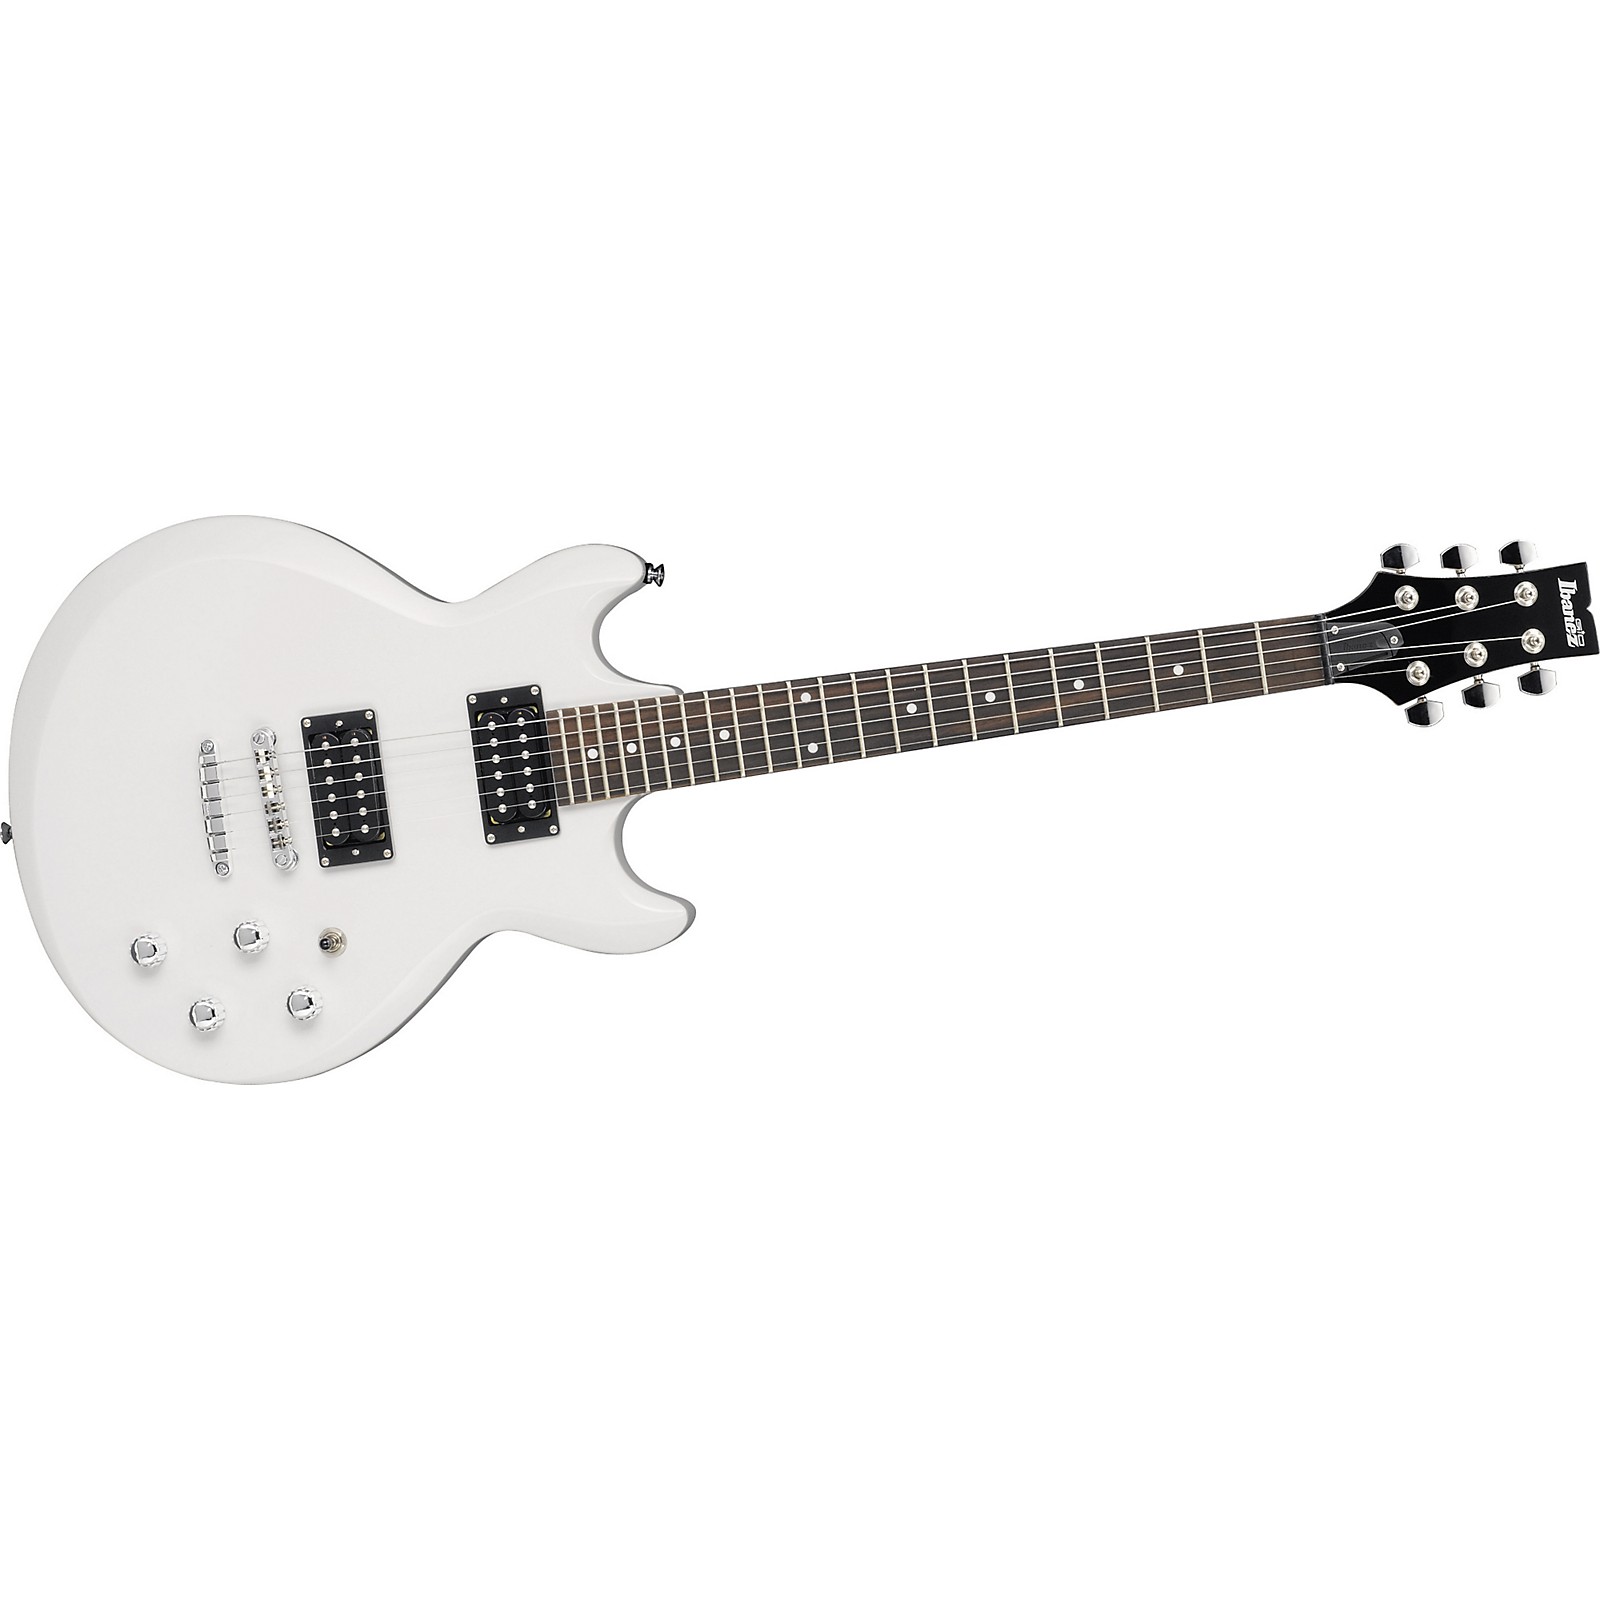 Ibanez GAX70 Electric Guitar White | Guitar Center